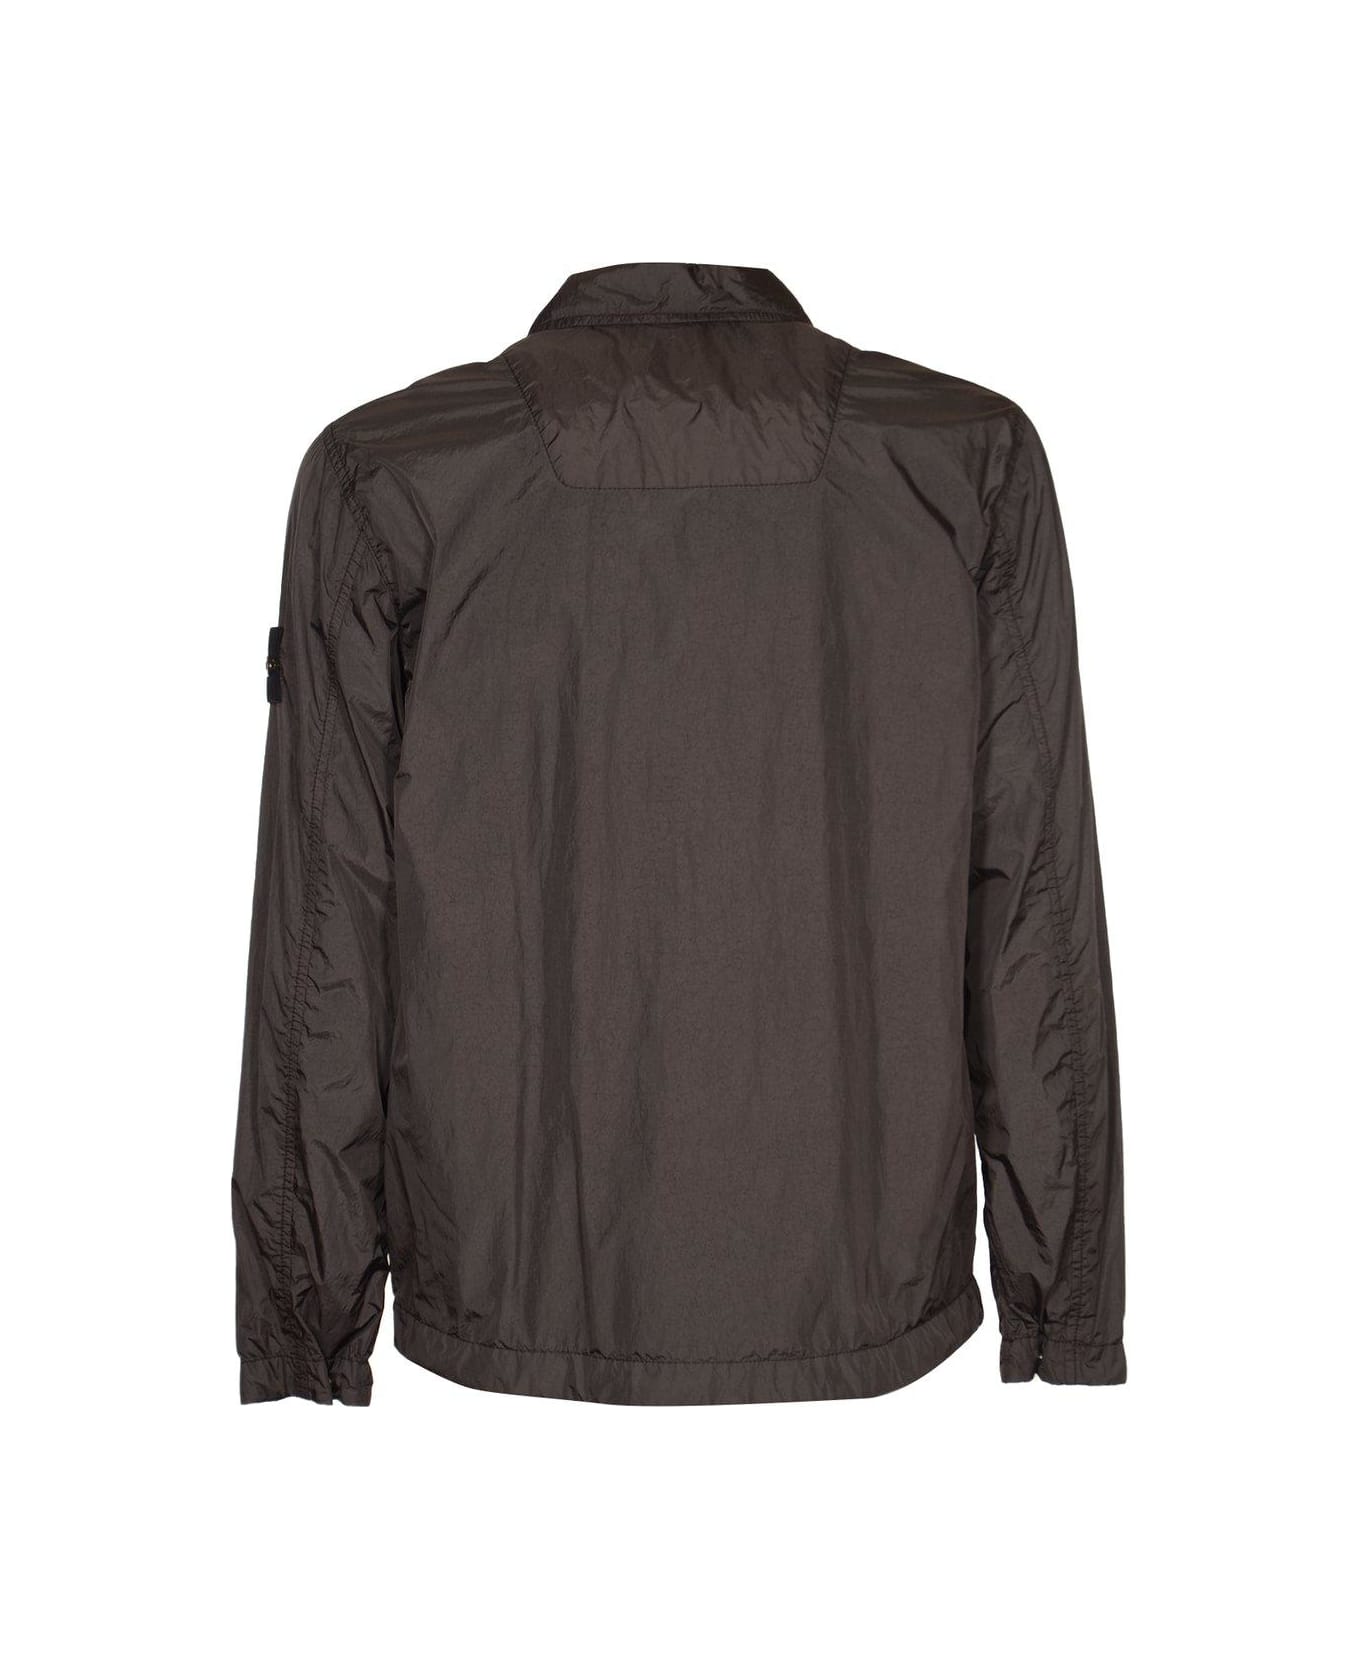 Stone Island Crinkle Reps Zipped Shirt Jacket - CHARCOAL ジャケット